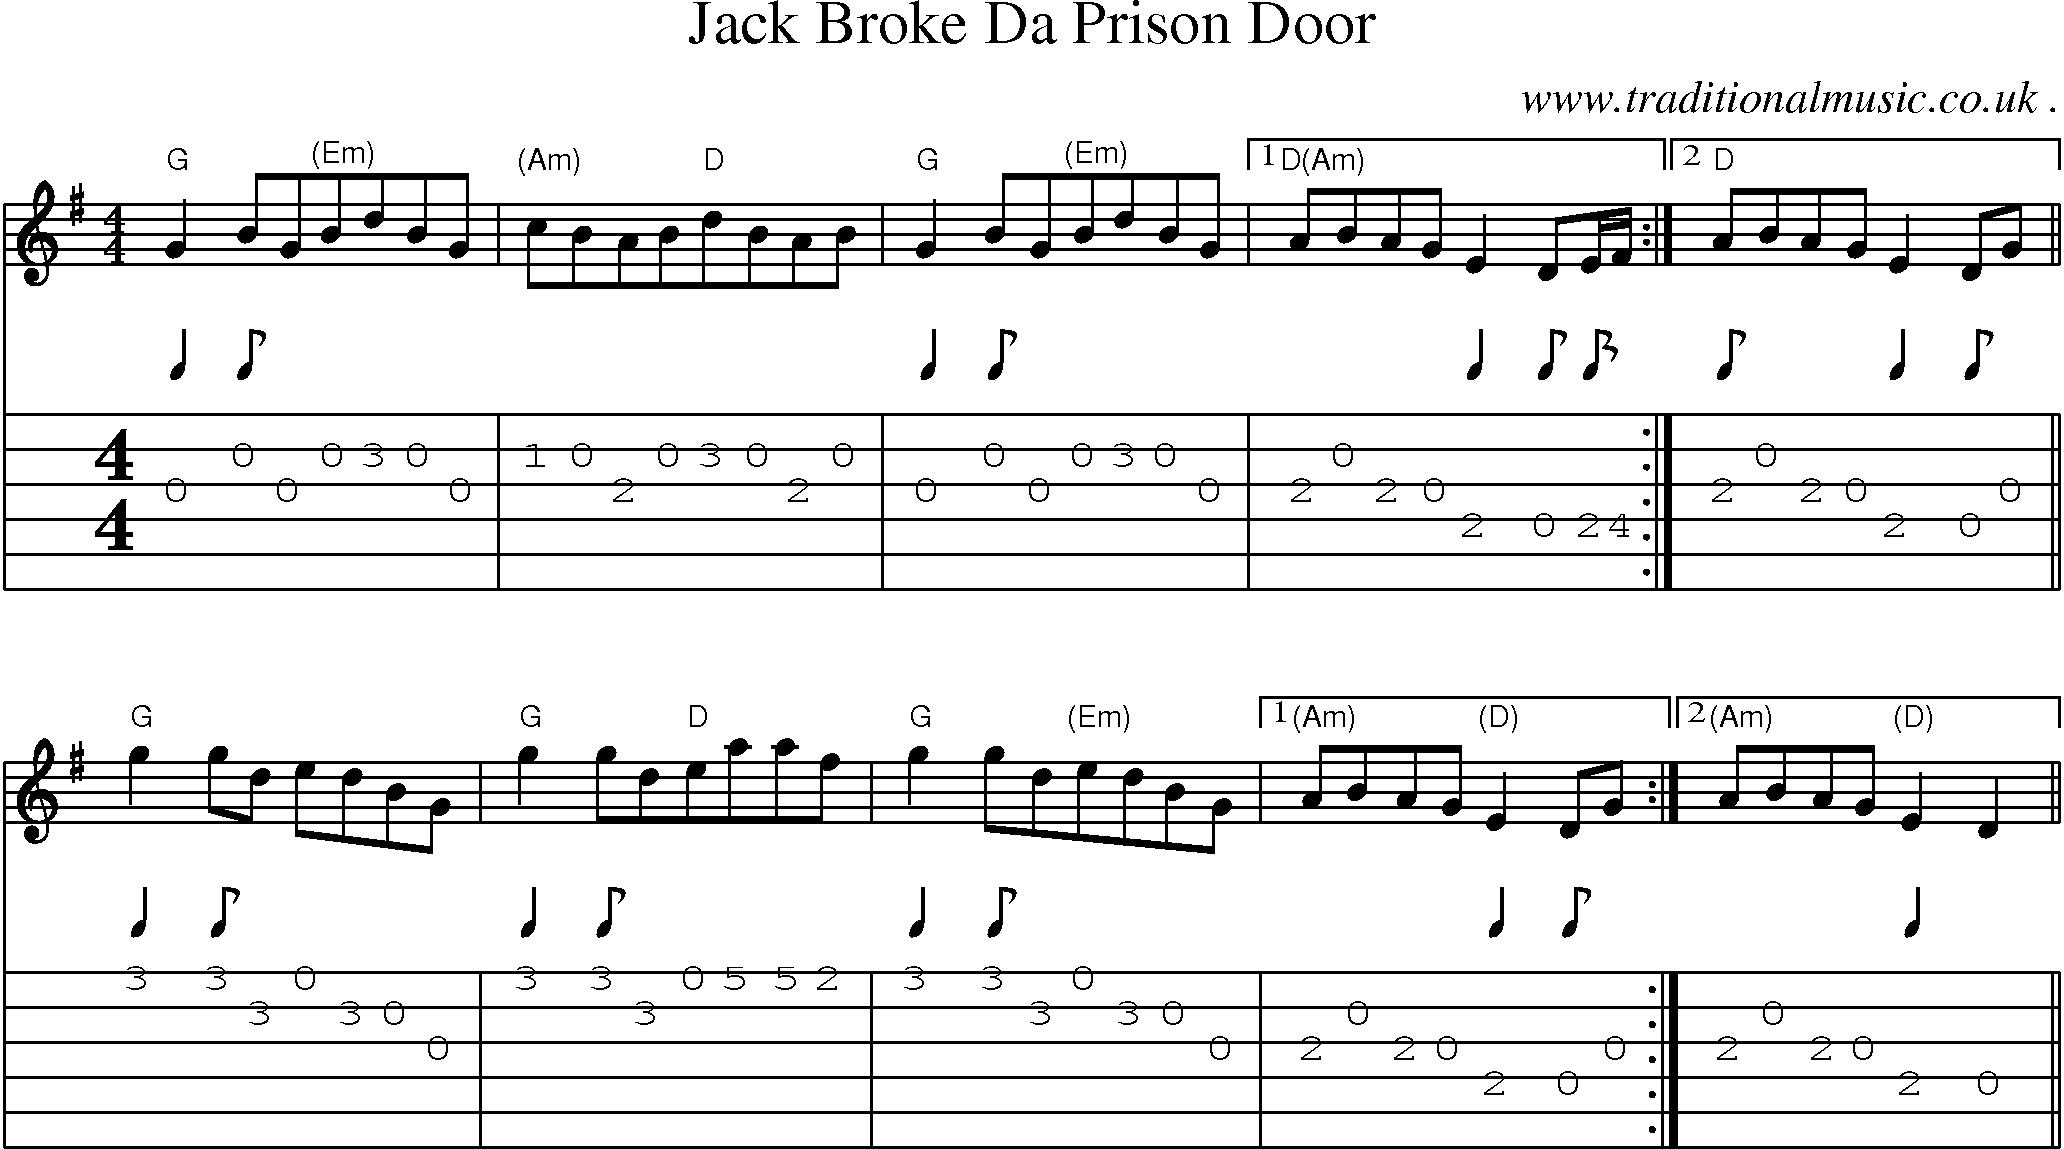 Sheet-Music and Guitar Tabs for Jack Broke Da Prison Door